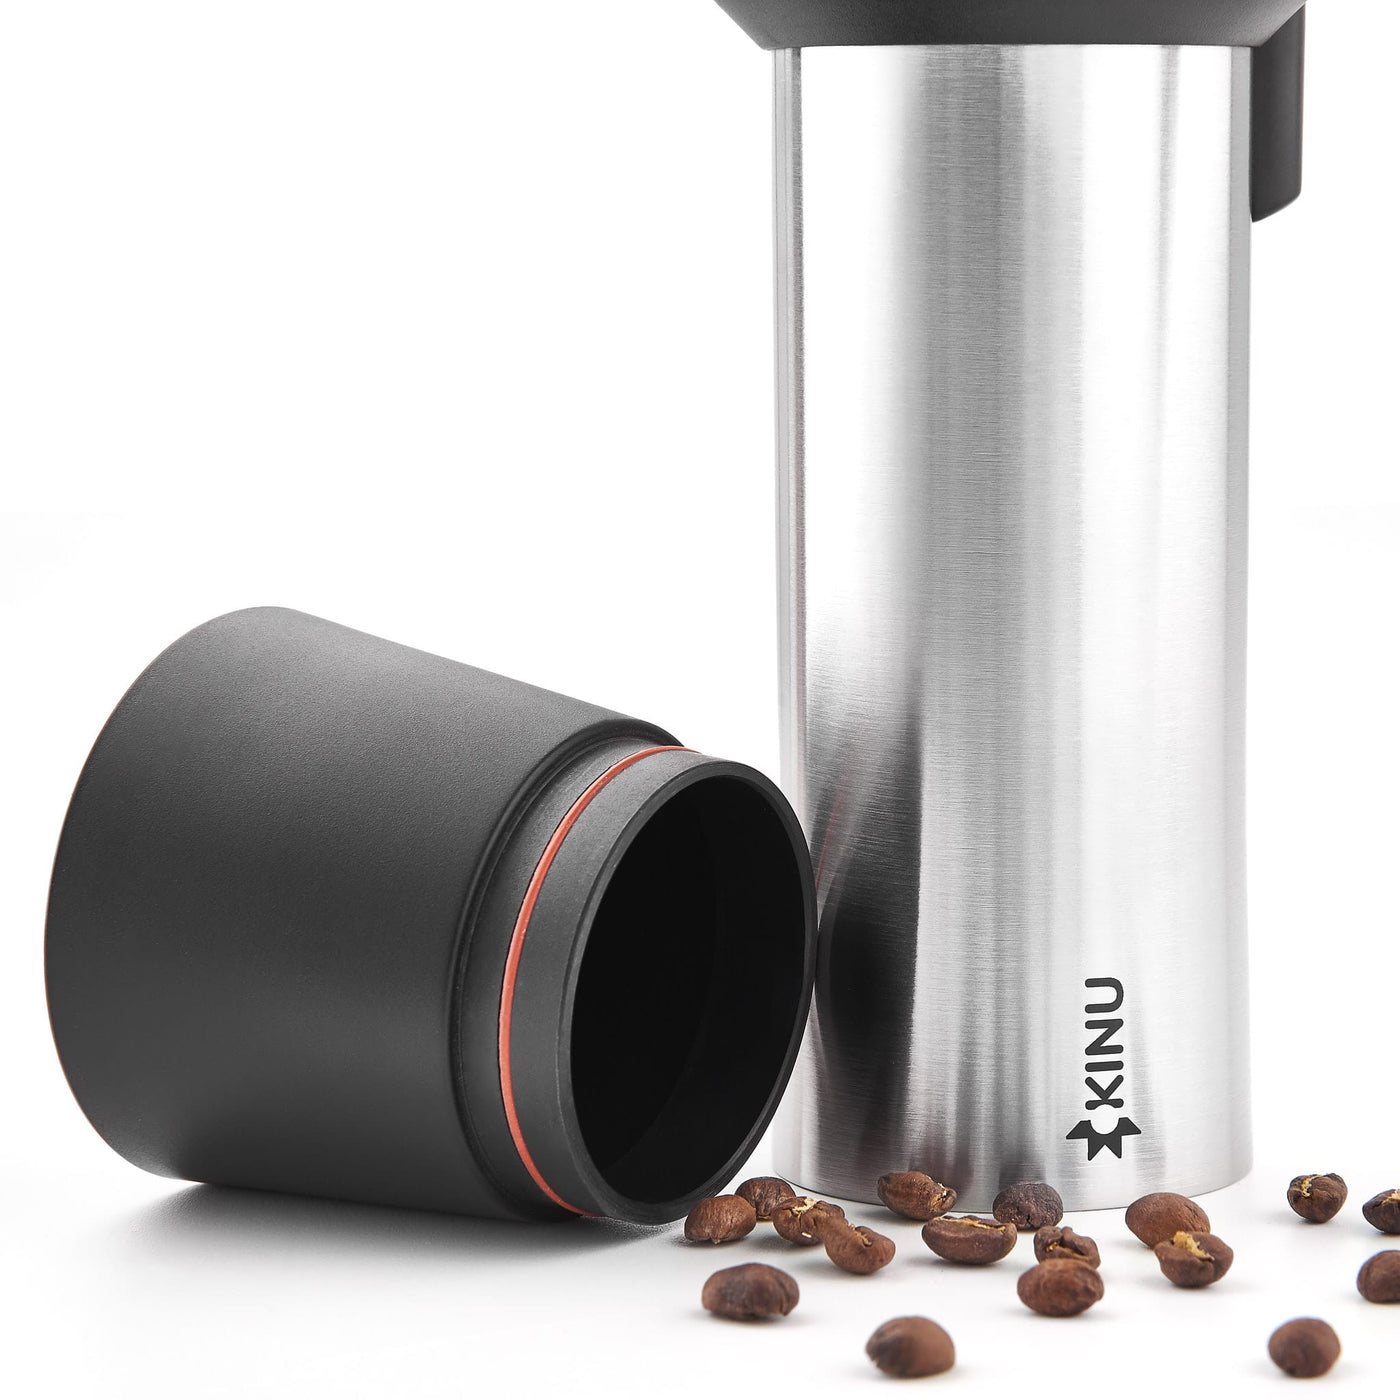 Kinu M47 Espresso Coffee Grinder - Food Safe ABS Grounds Catcher